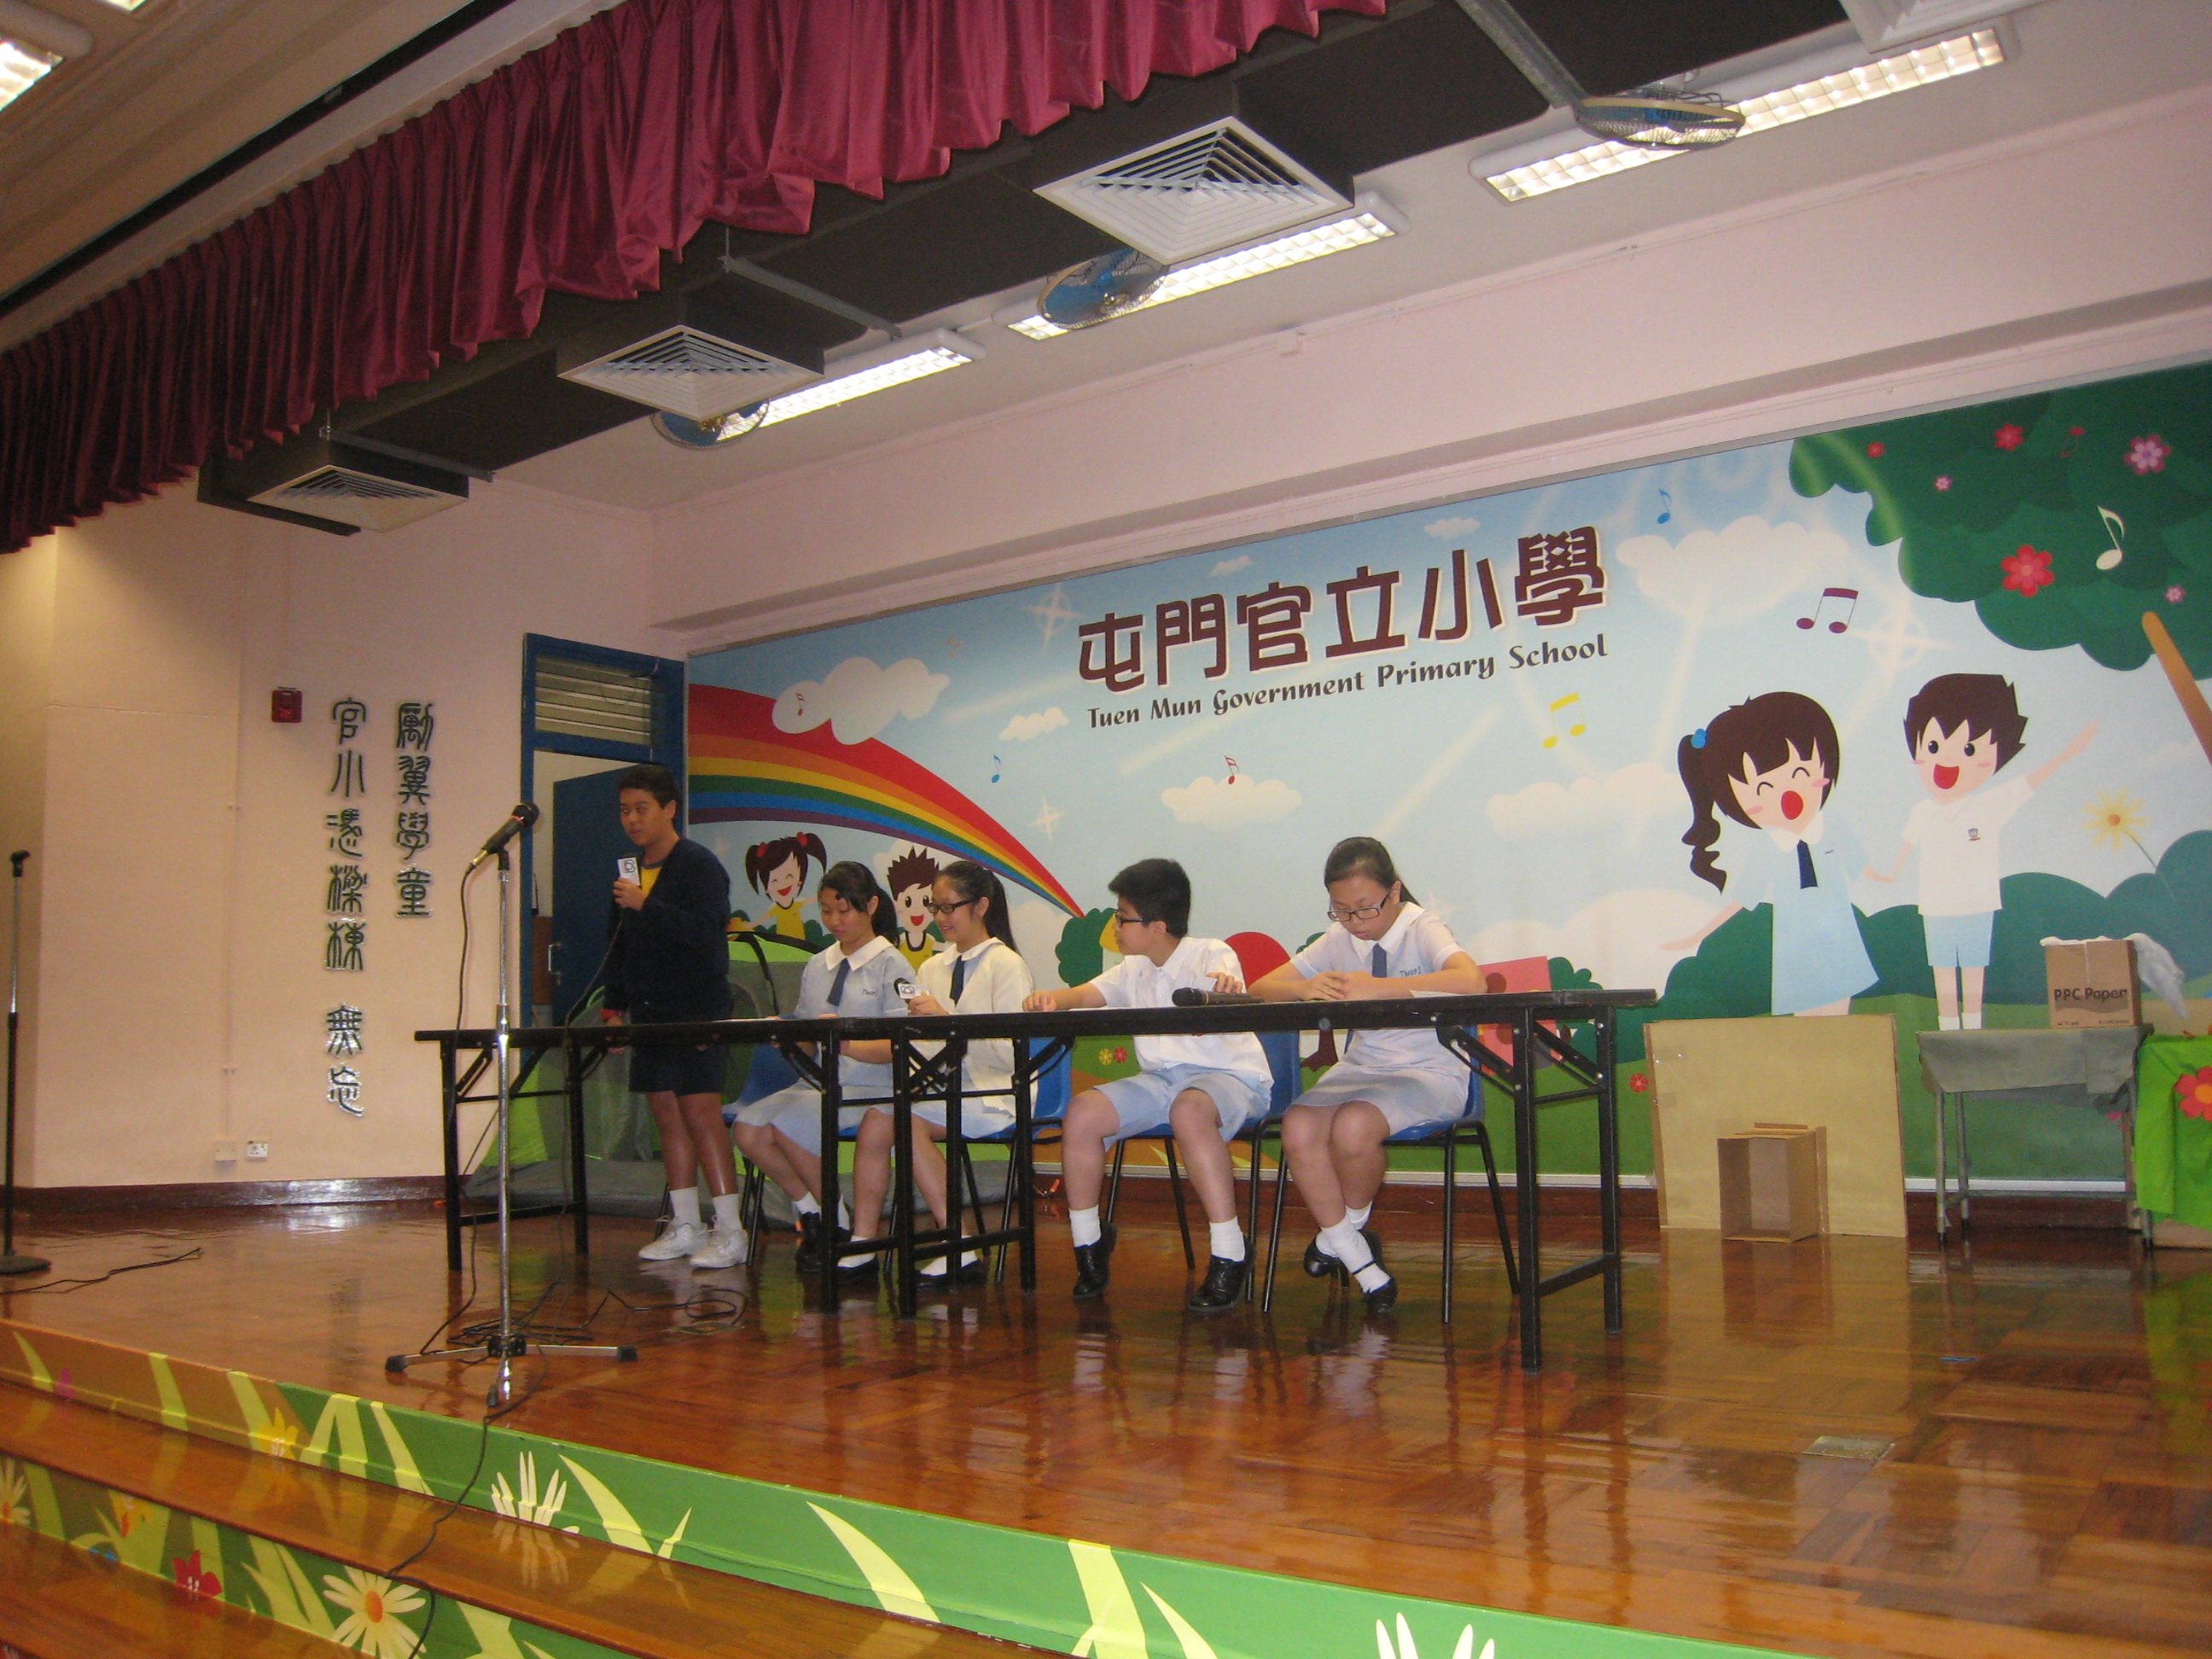 Tuen Mun Government Primary School